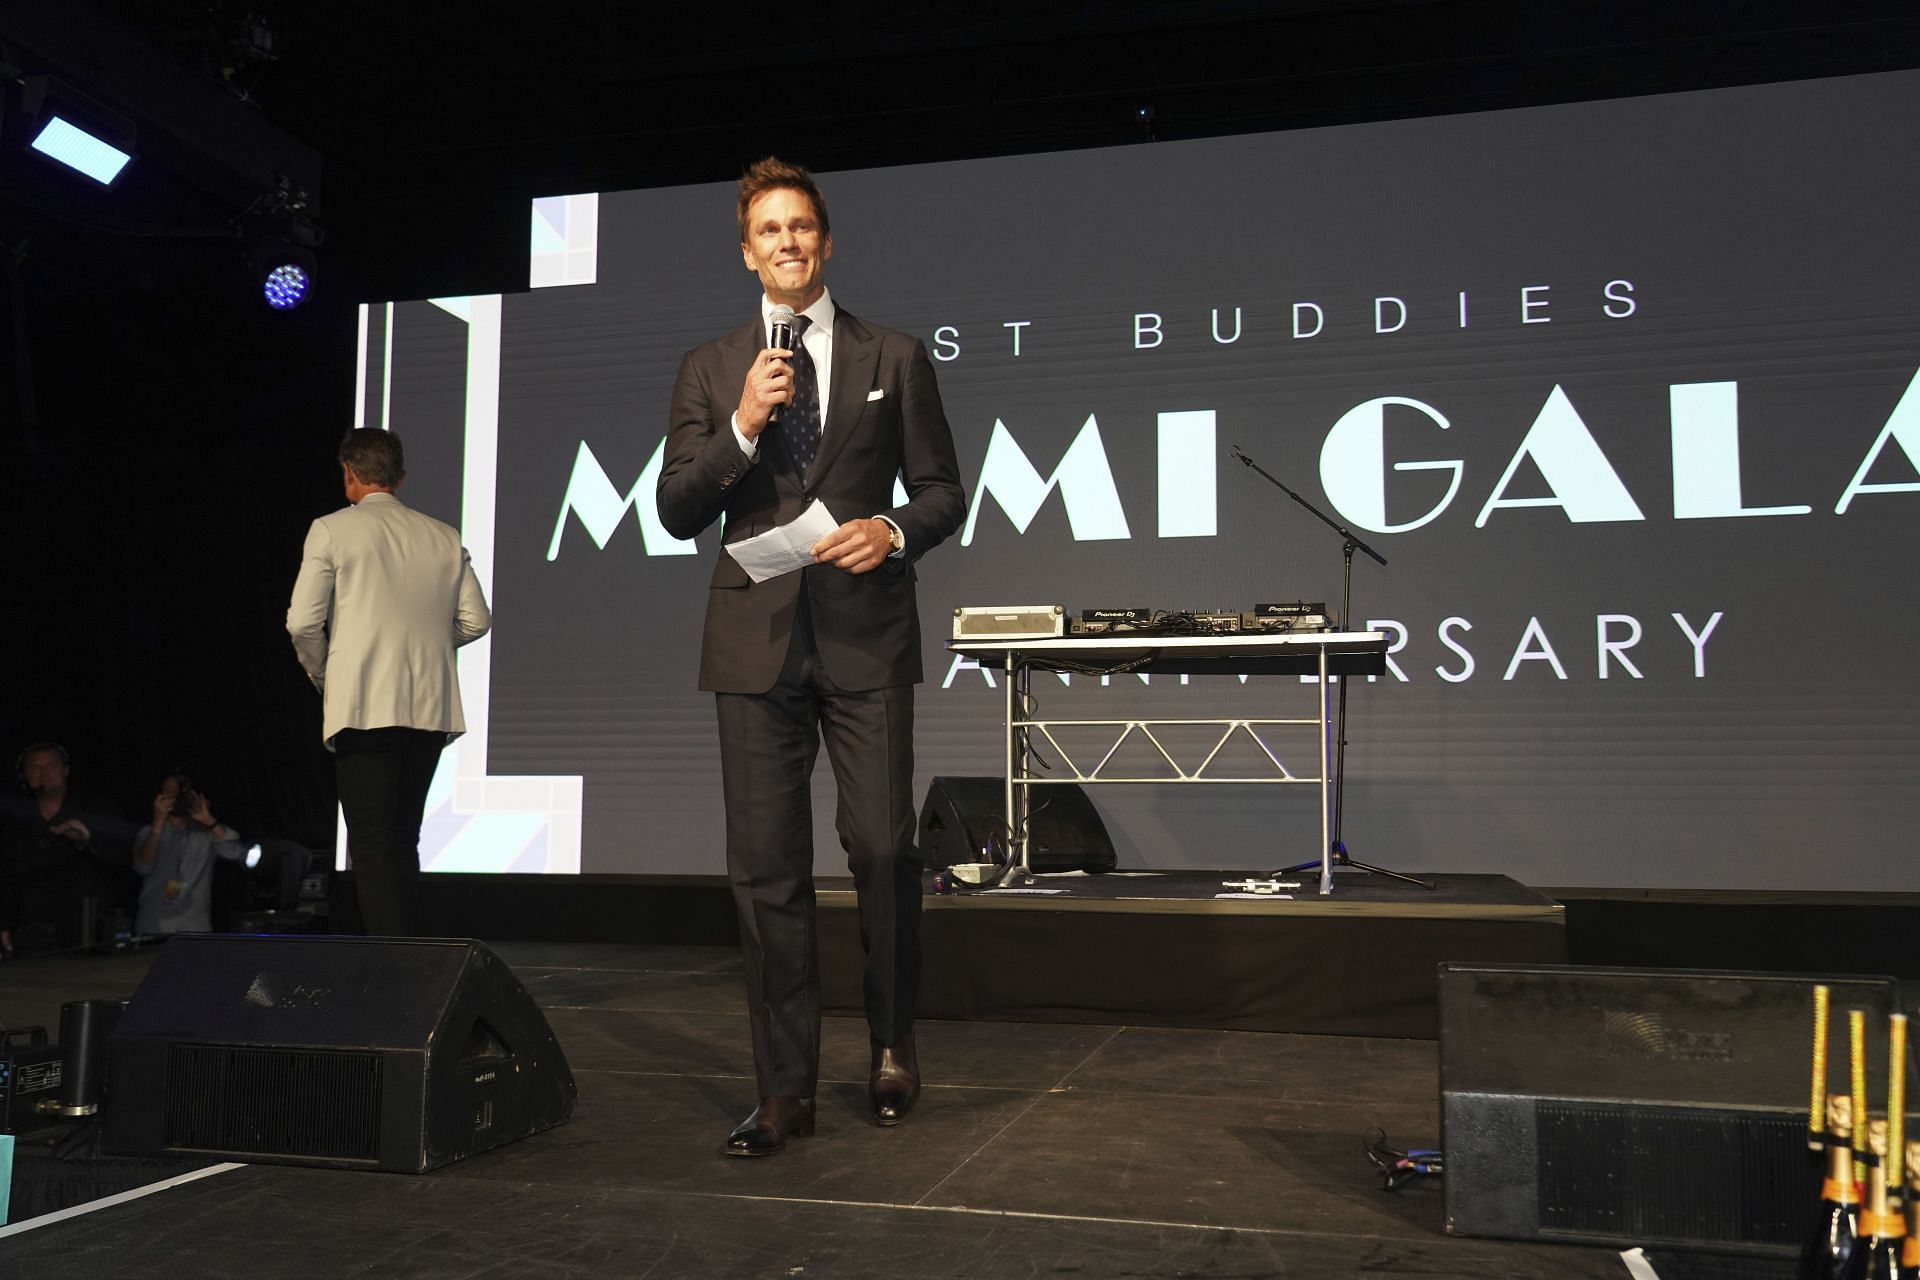 25th Annual Best Buddies Miami Gala